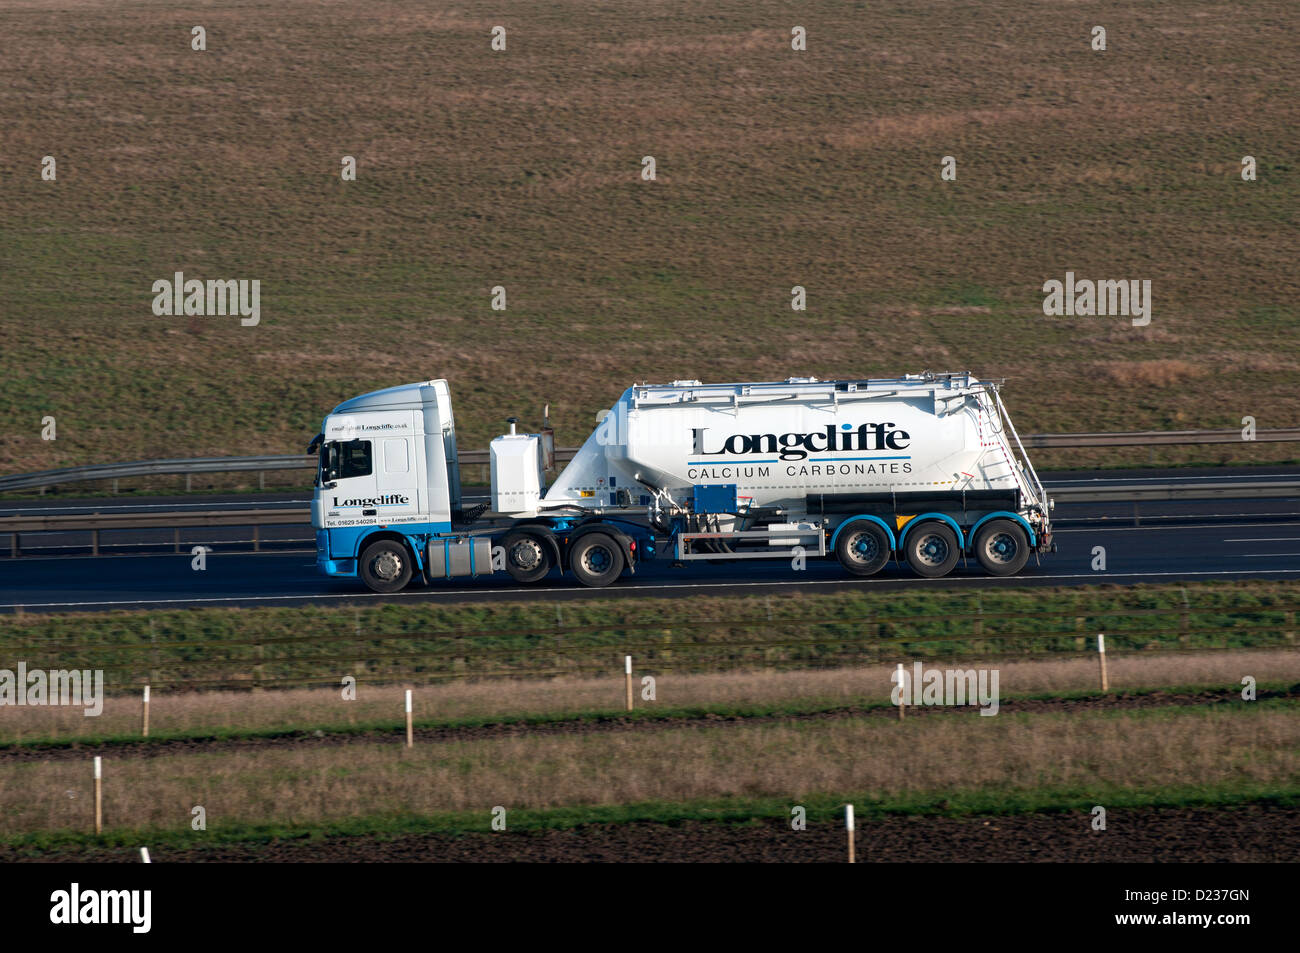 Longcliffe calcium carbonates tanker lorry on M40 motorway, UK Stock Photo